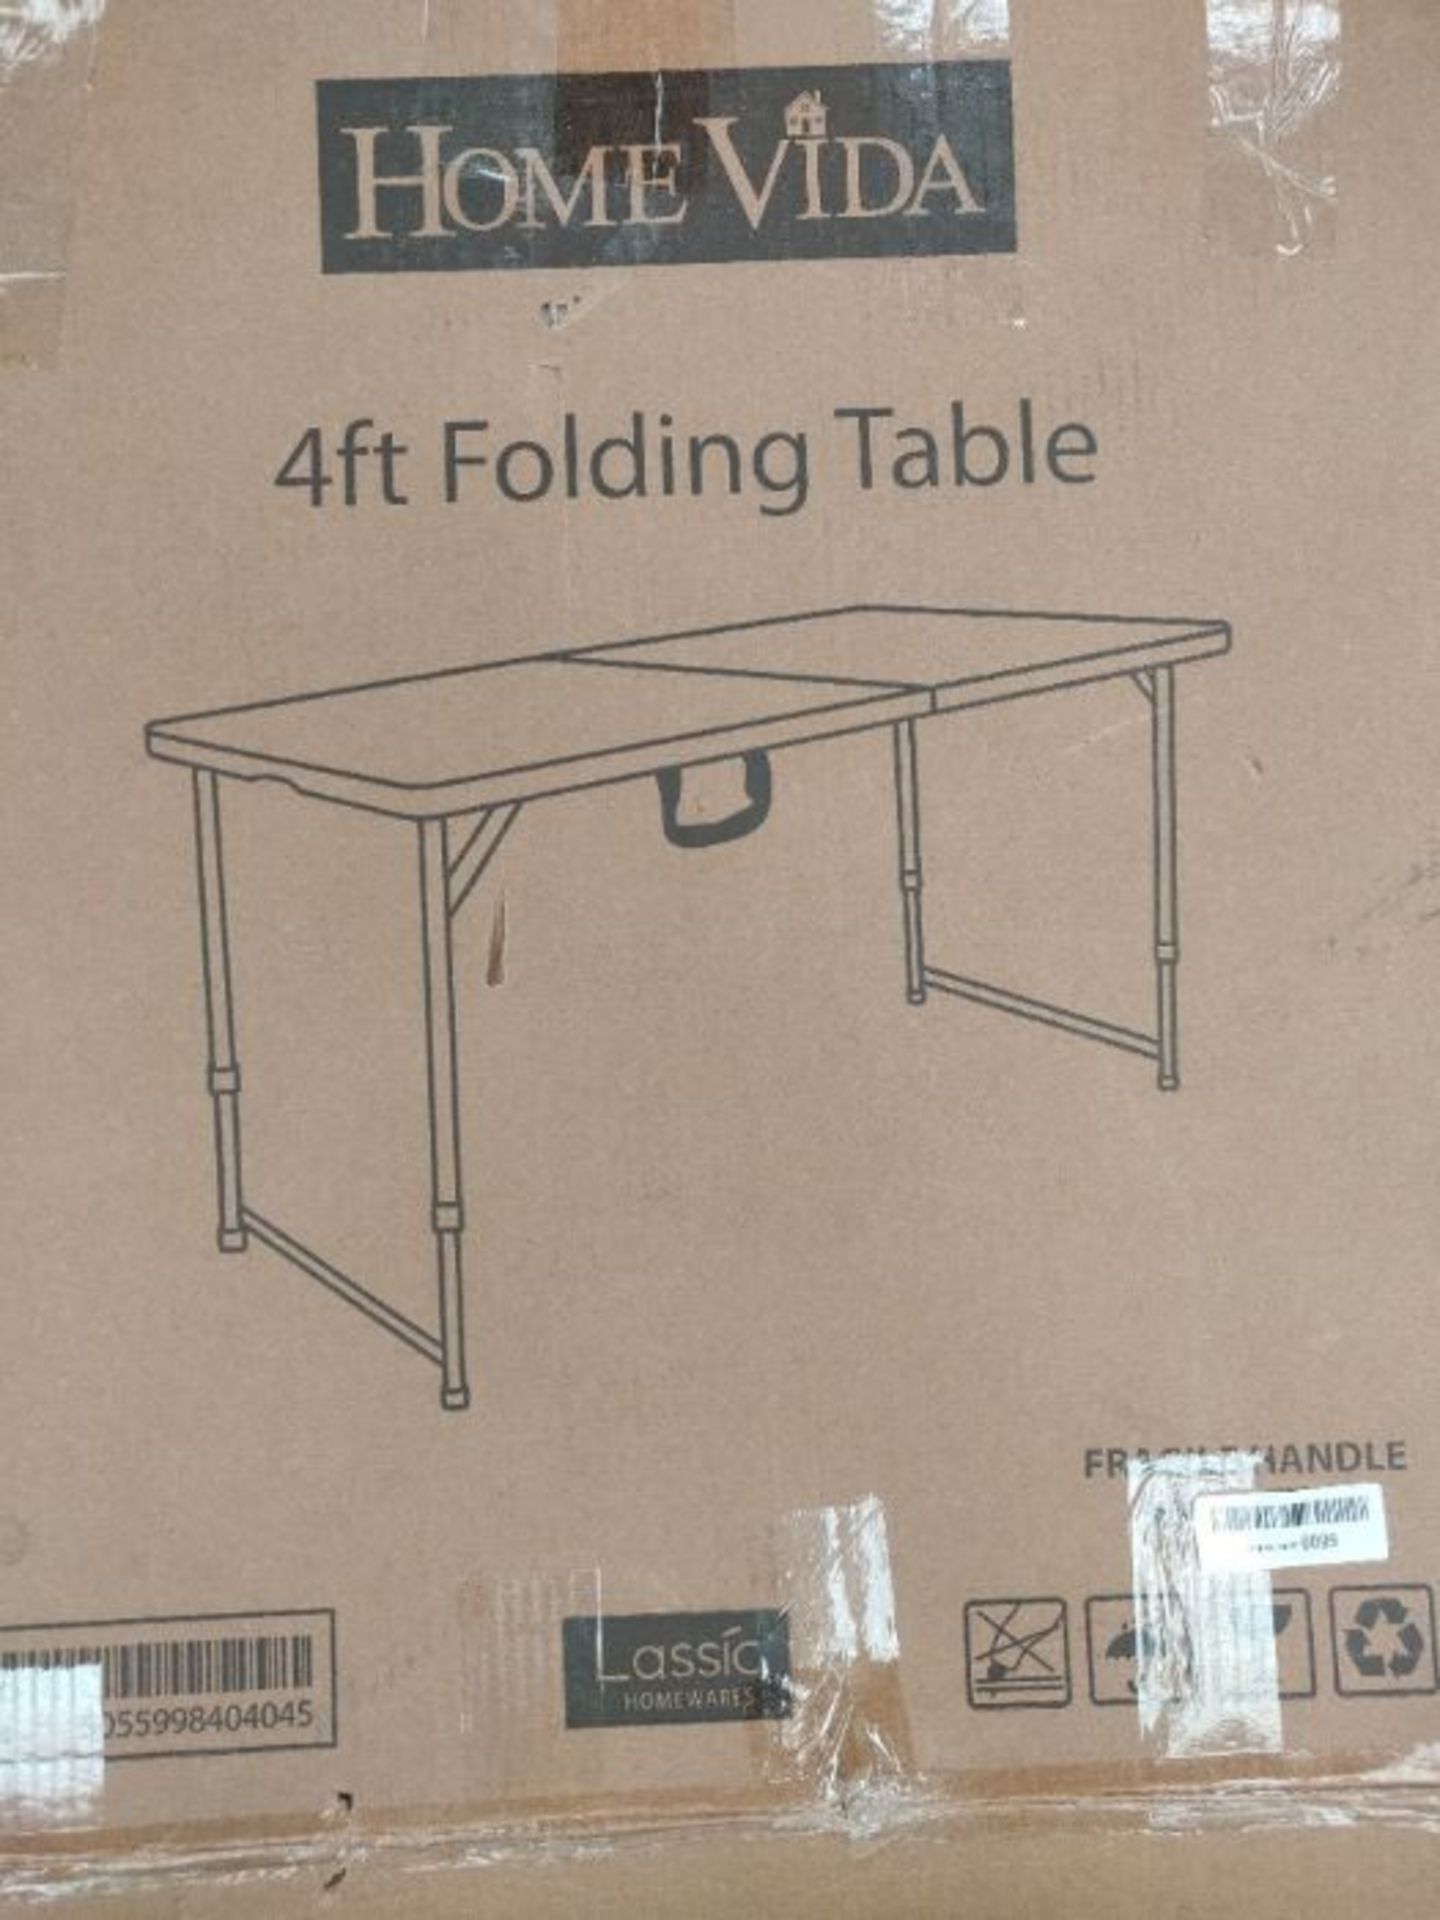 Amazon Basics Heavy Duty Trestle Picnic Folding Table Silver, 4 feet - Image 3 of 3